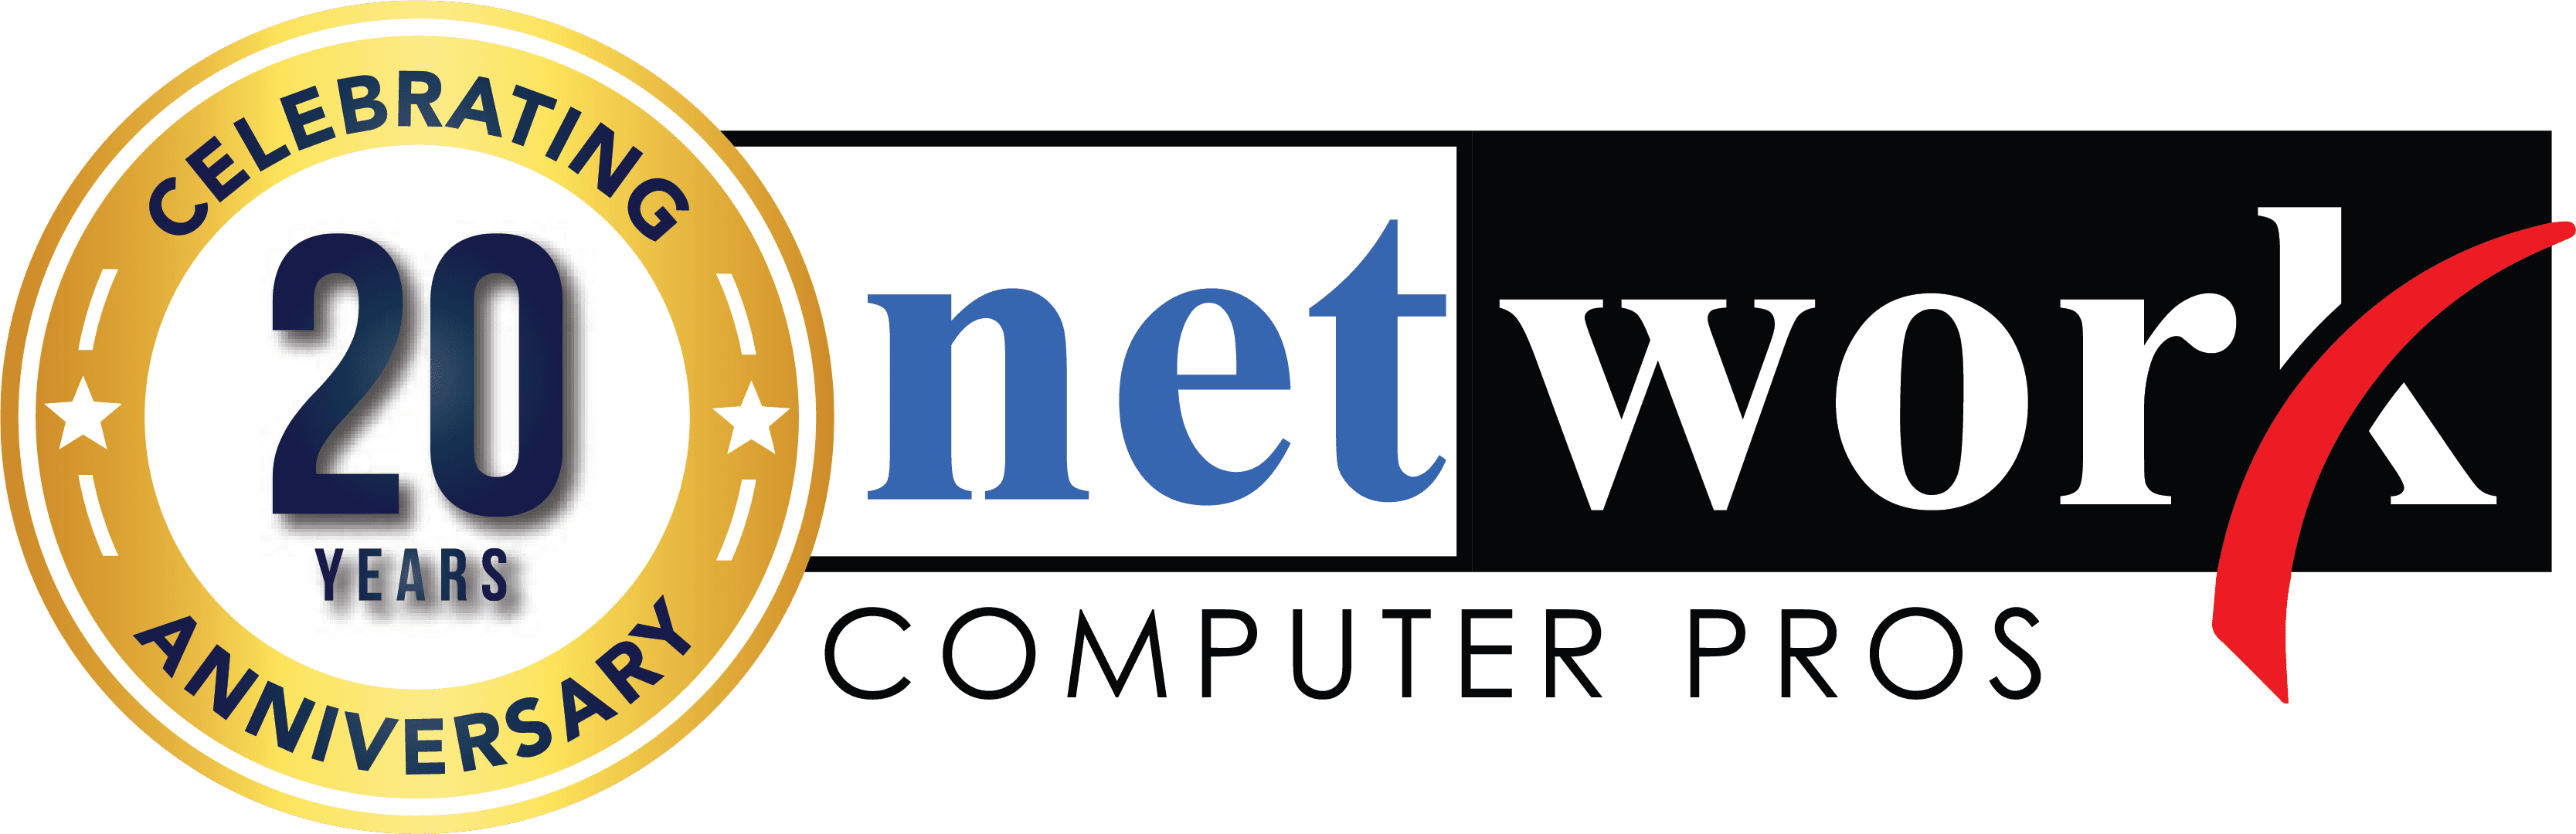 Network Computer Pros